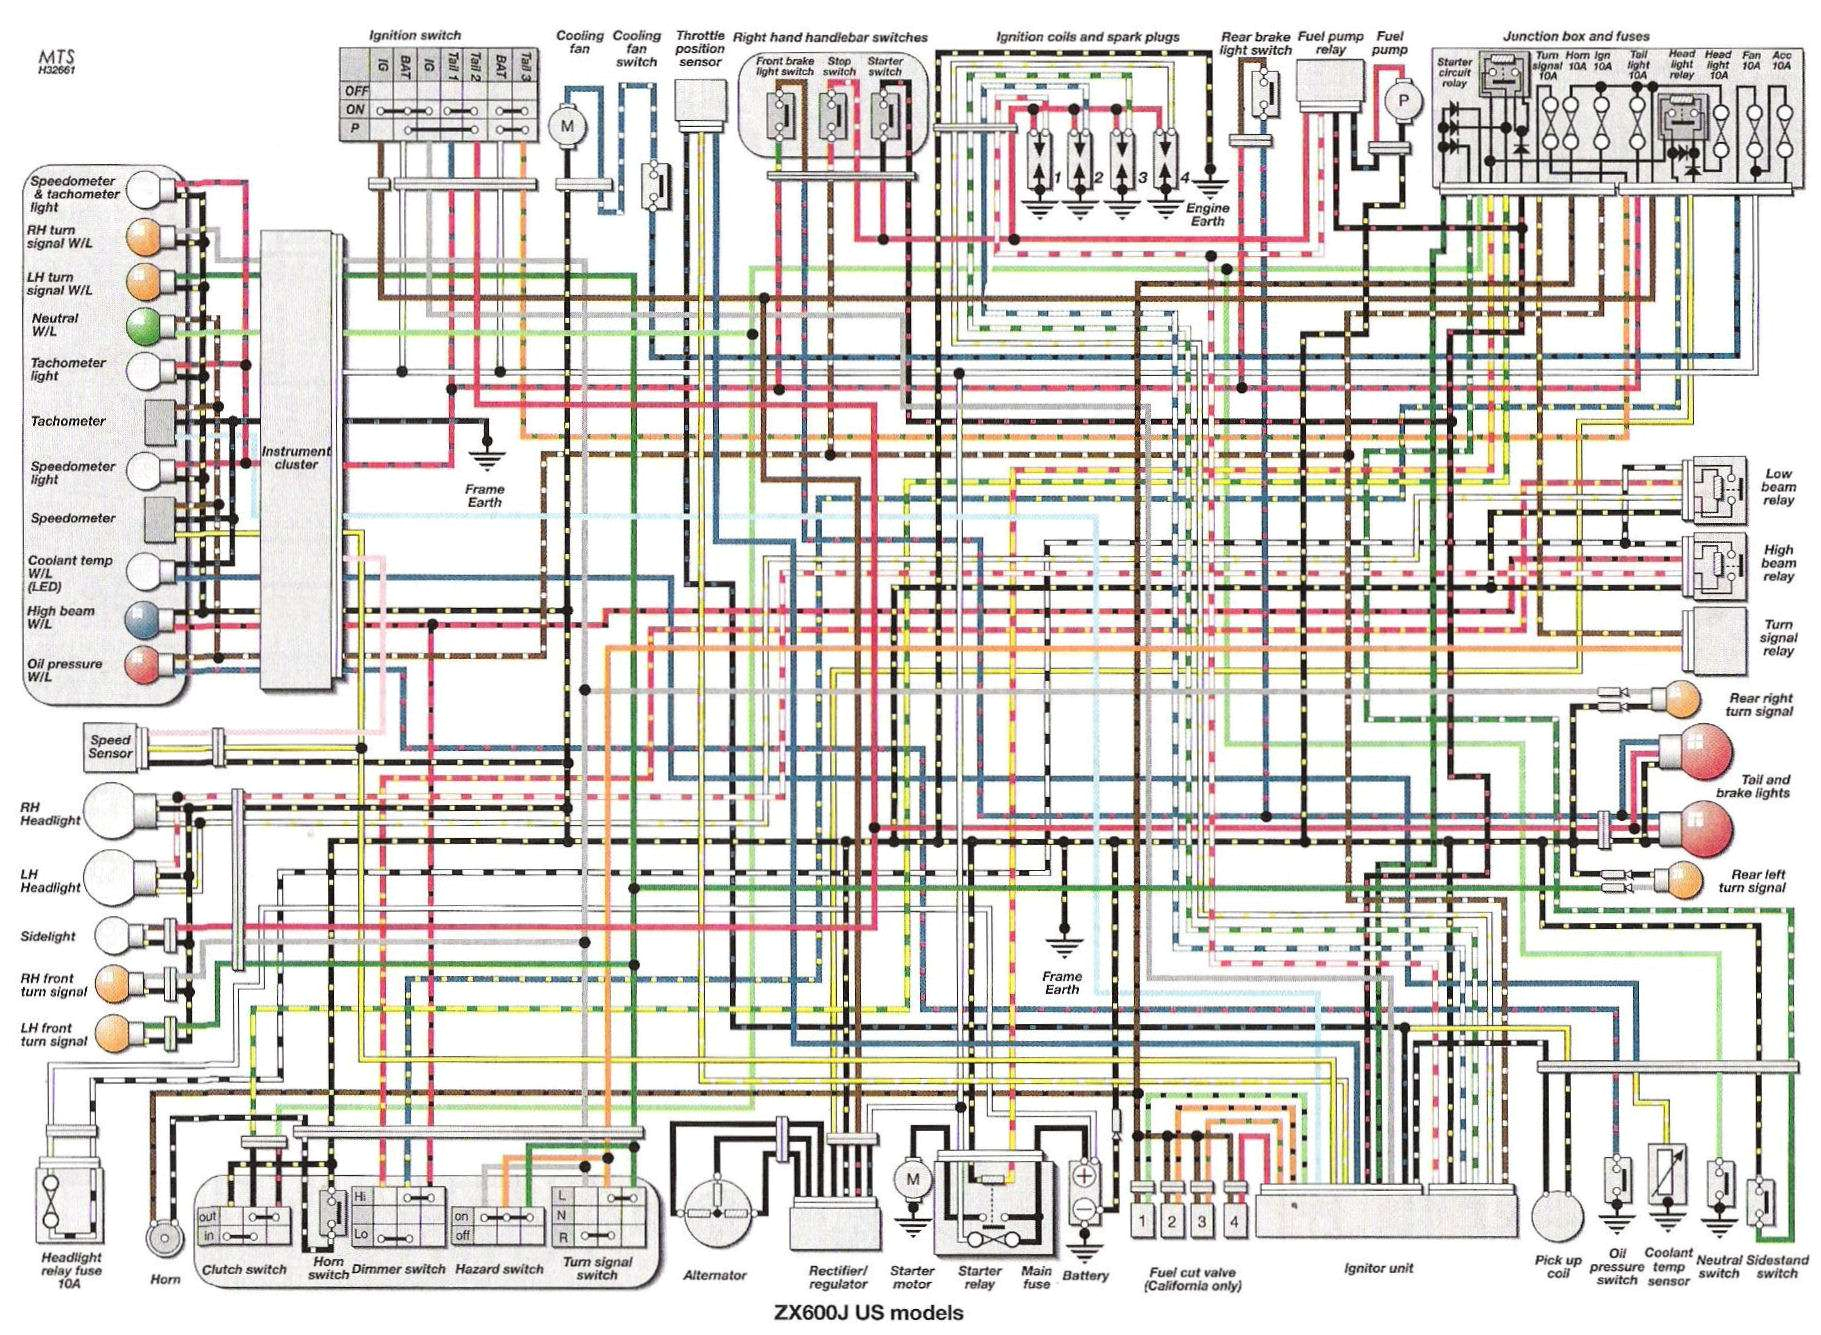 2000 kawasaki zx12 wiring diagram wiring diagram2000 kawasaki zx12 wiring diagram 1 wiring diagram sourcezx12 wiring